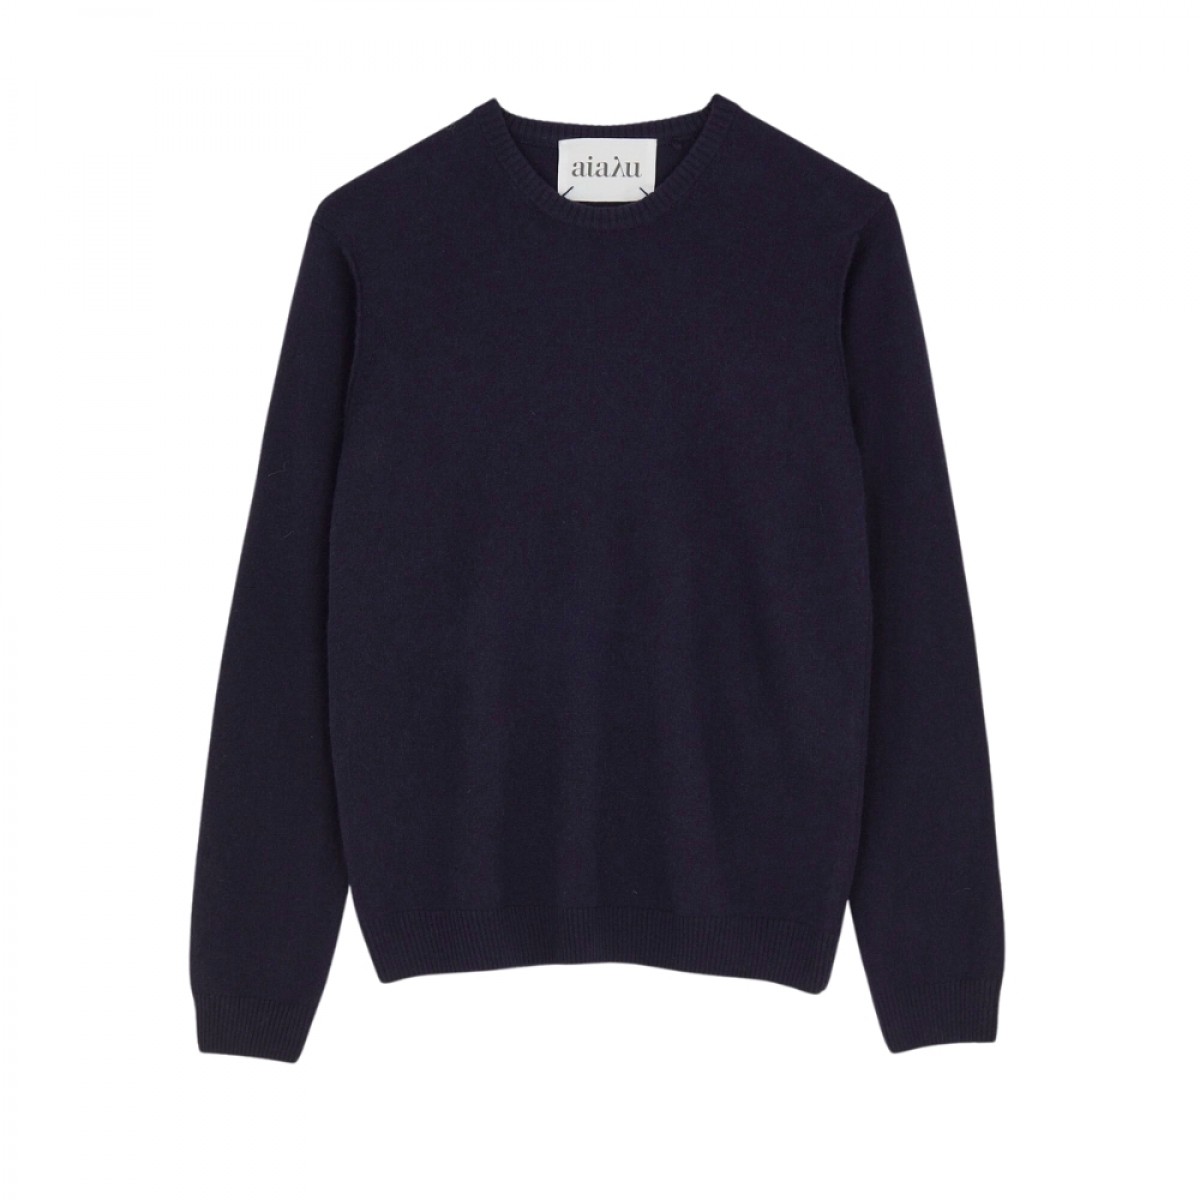 leonardo cashmere sweater - black blue - front